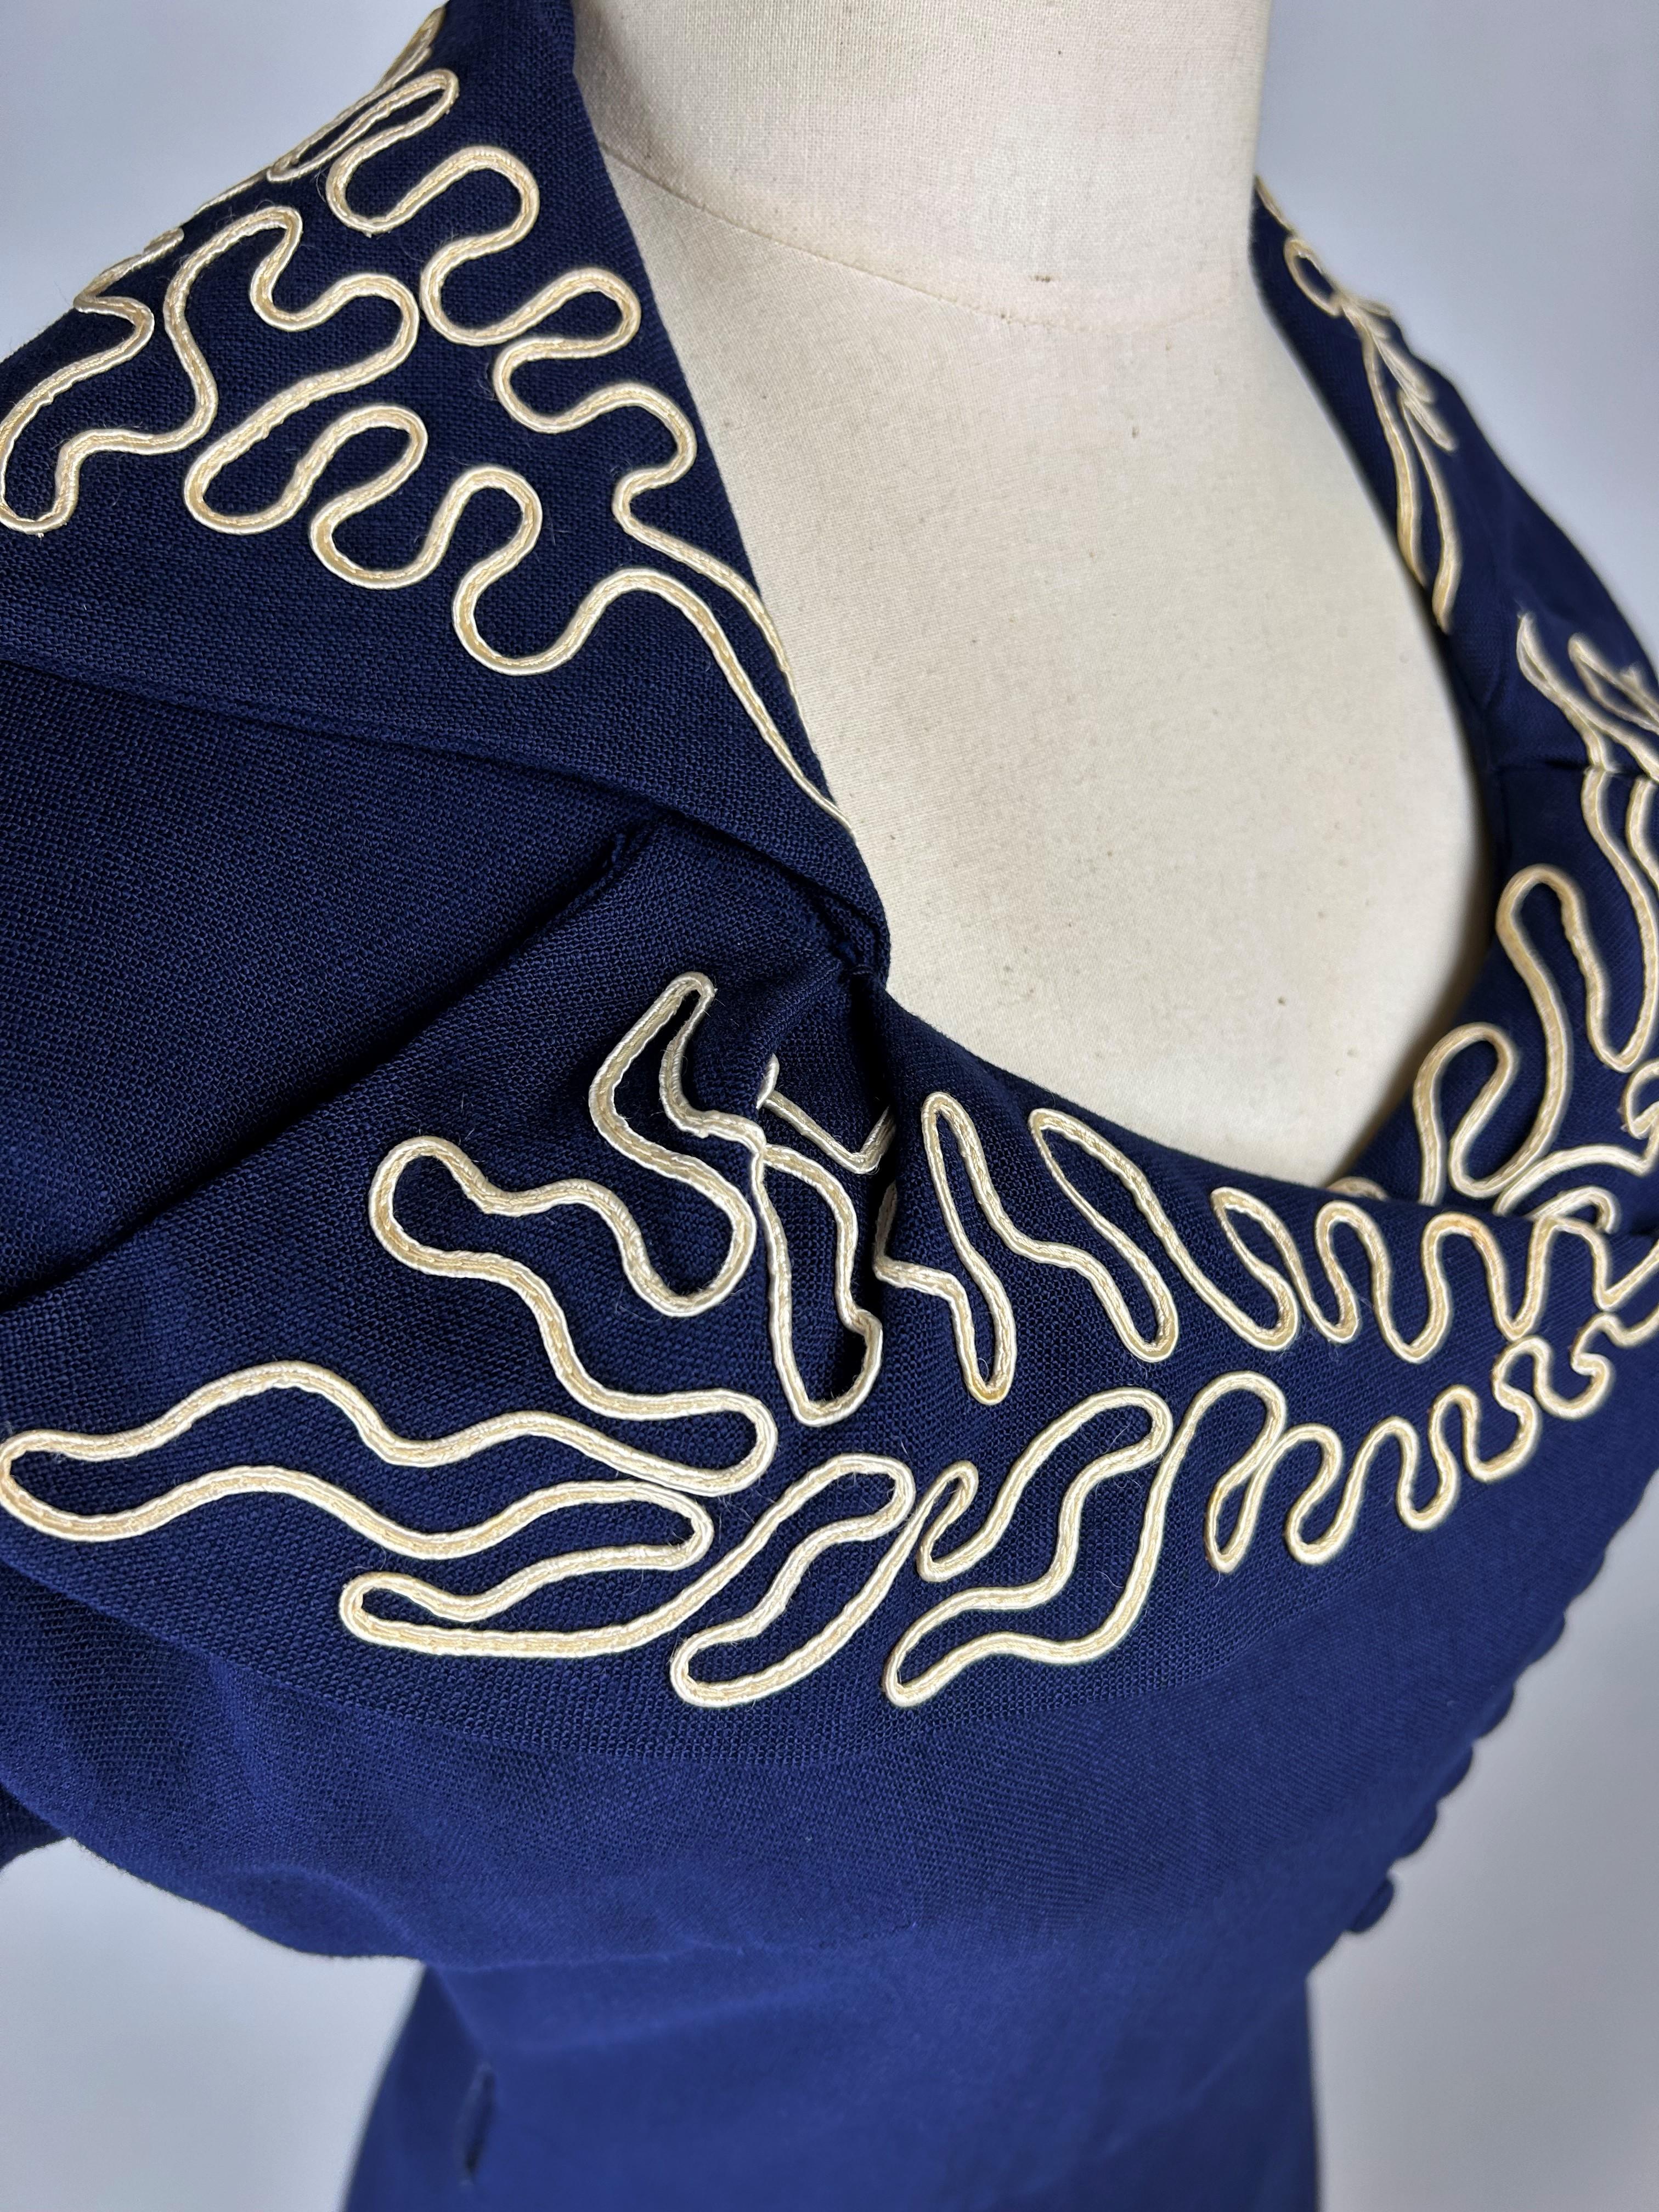 Robe de jour en tissu bleu marine avec applications de passepoils blancs Circa 1945-1950 en vente 12